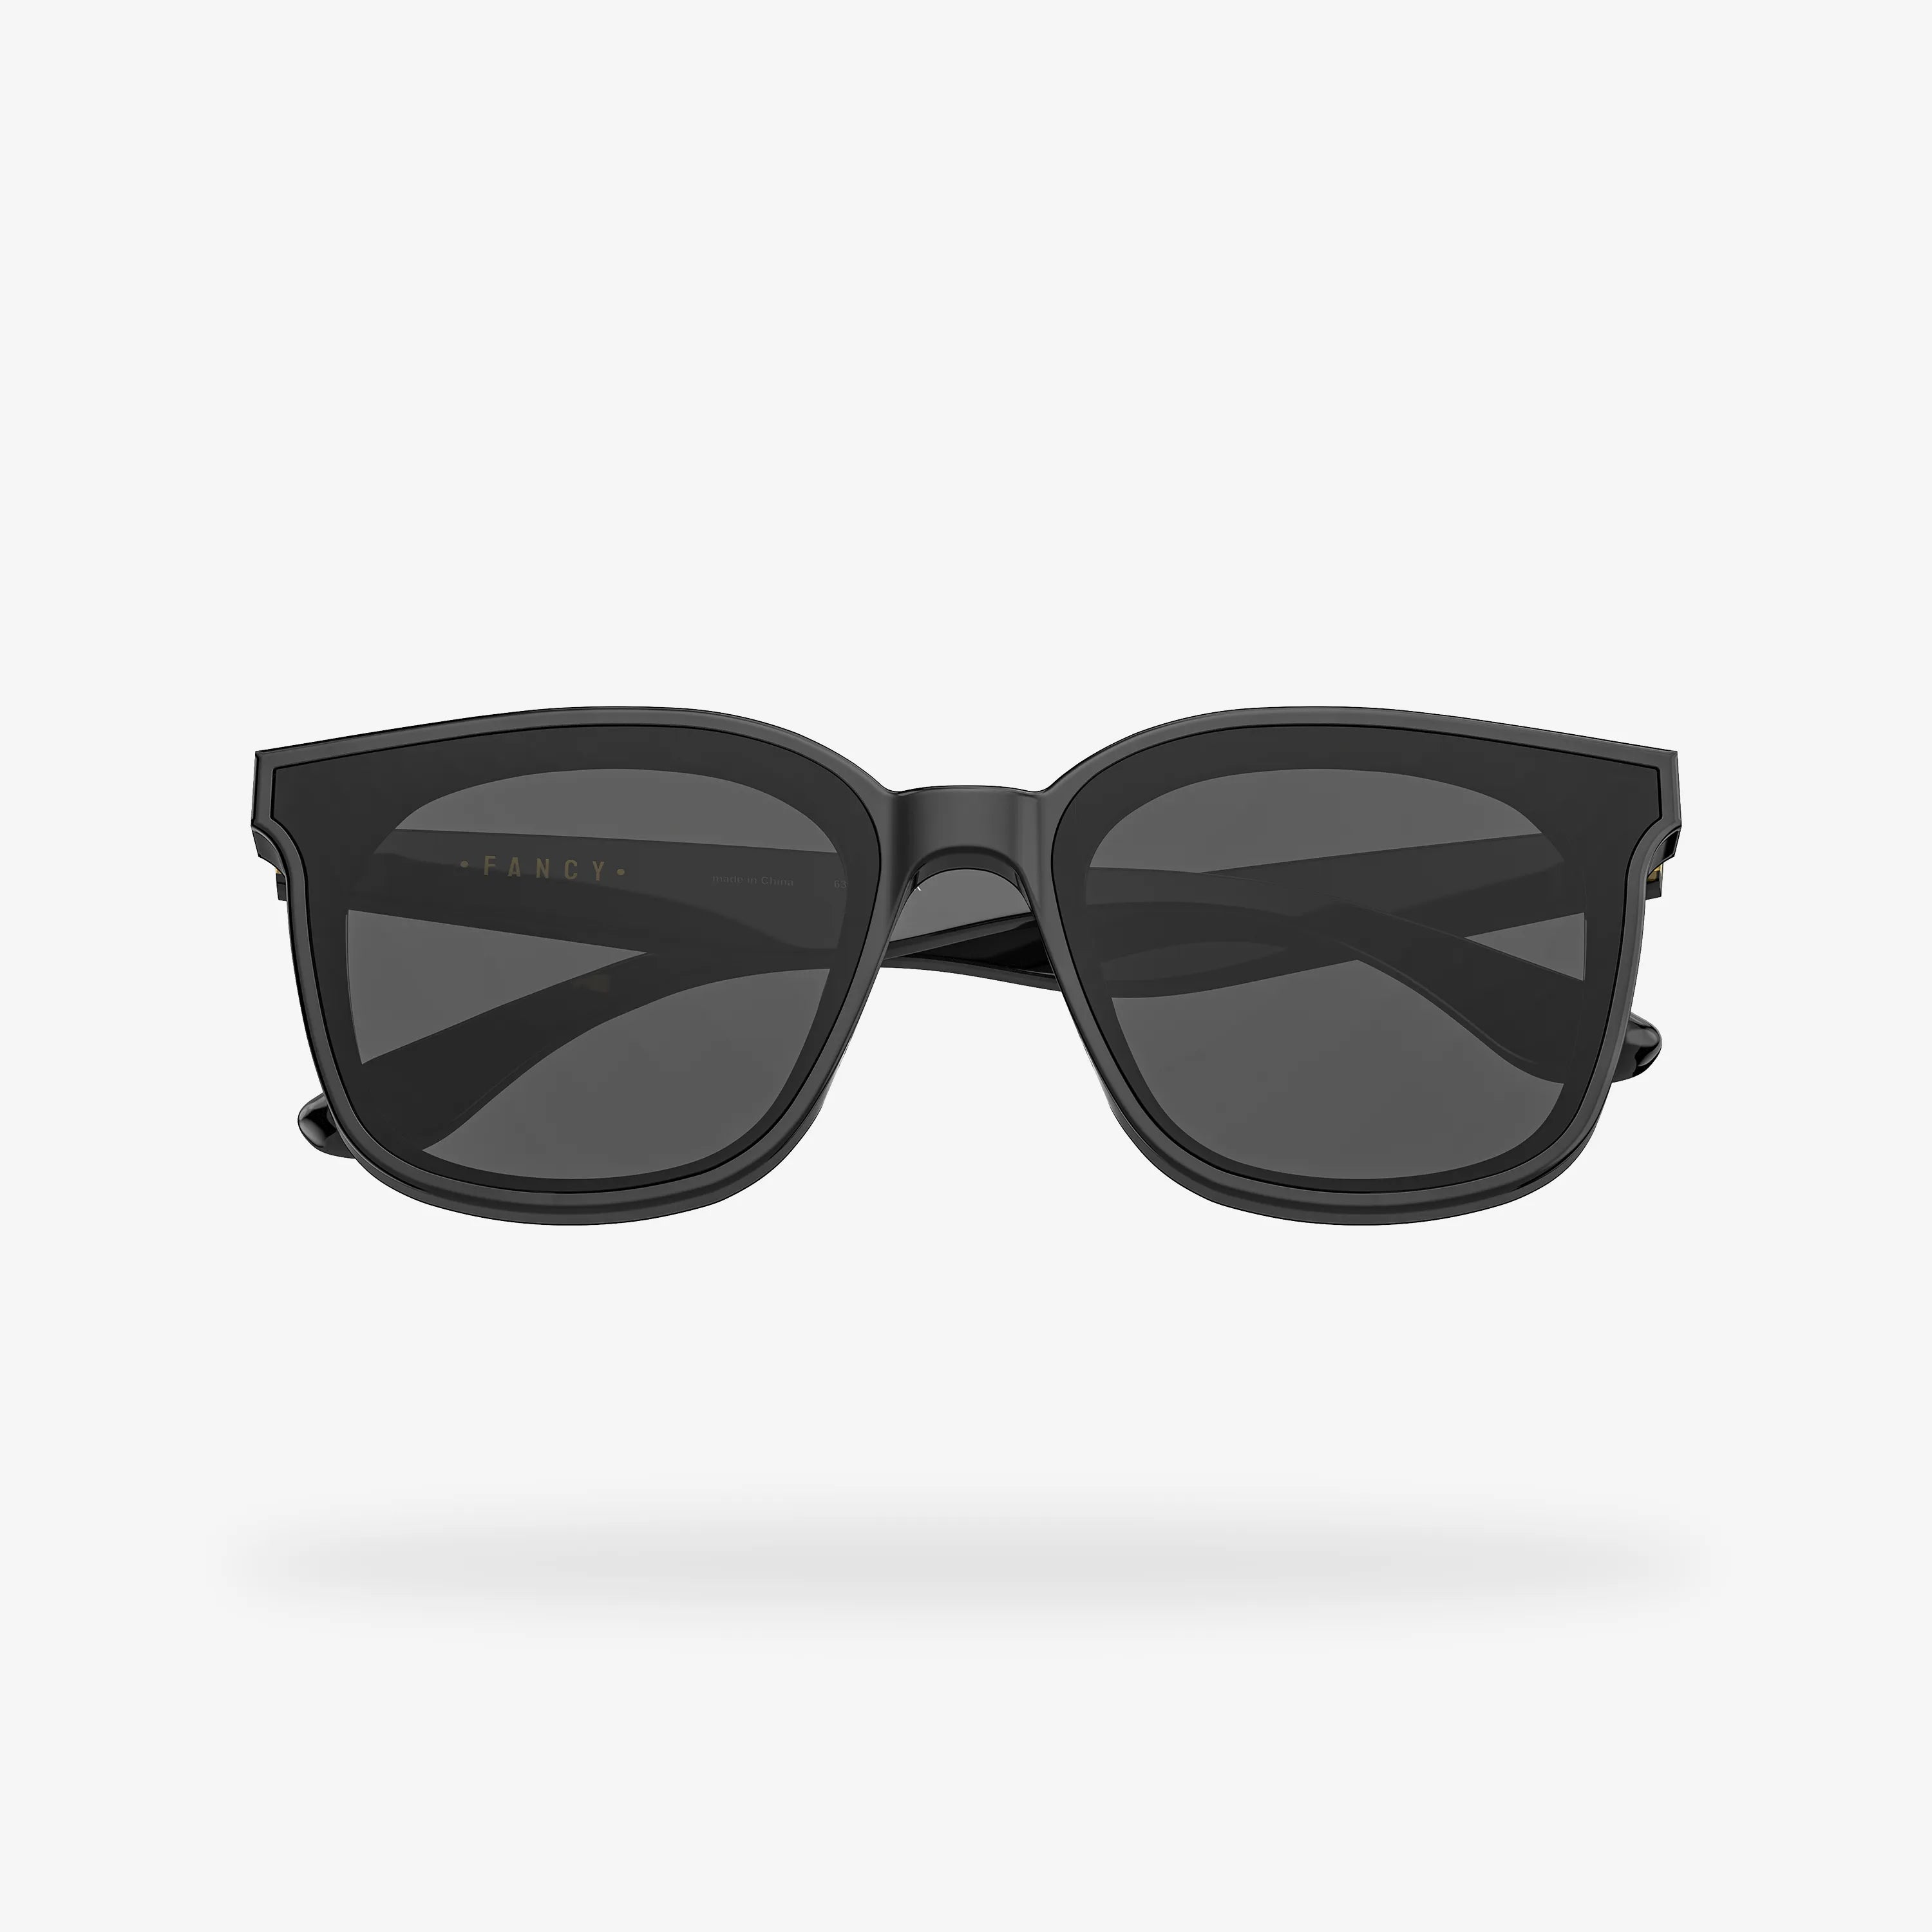 Fancy Black Square Acetate Sunglasses 블랙 스퀘어 아세테이트 선글라스